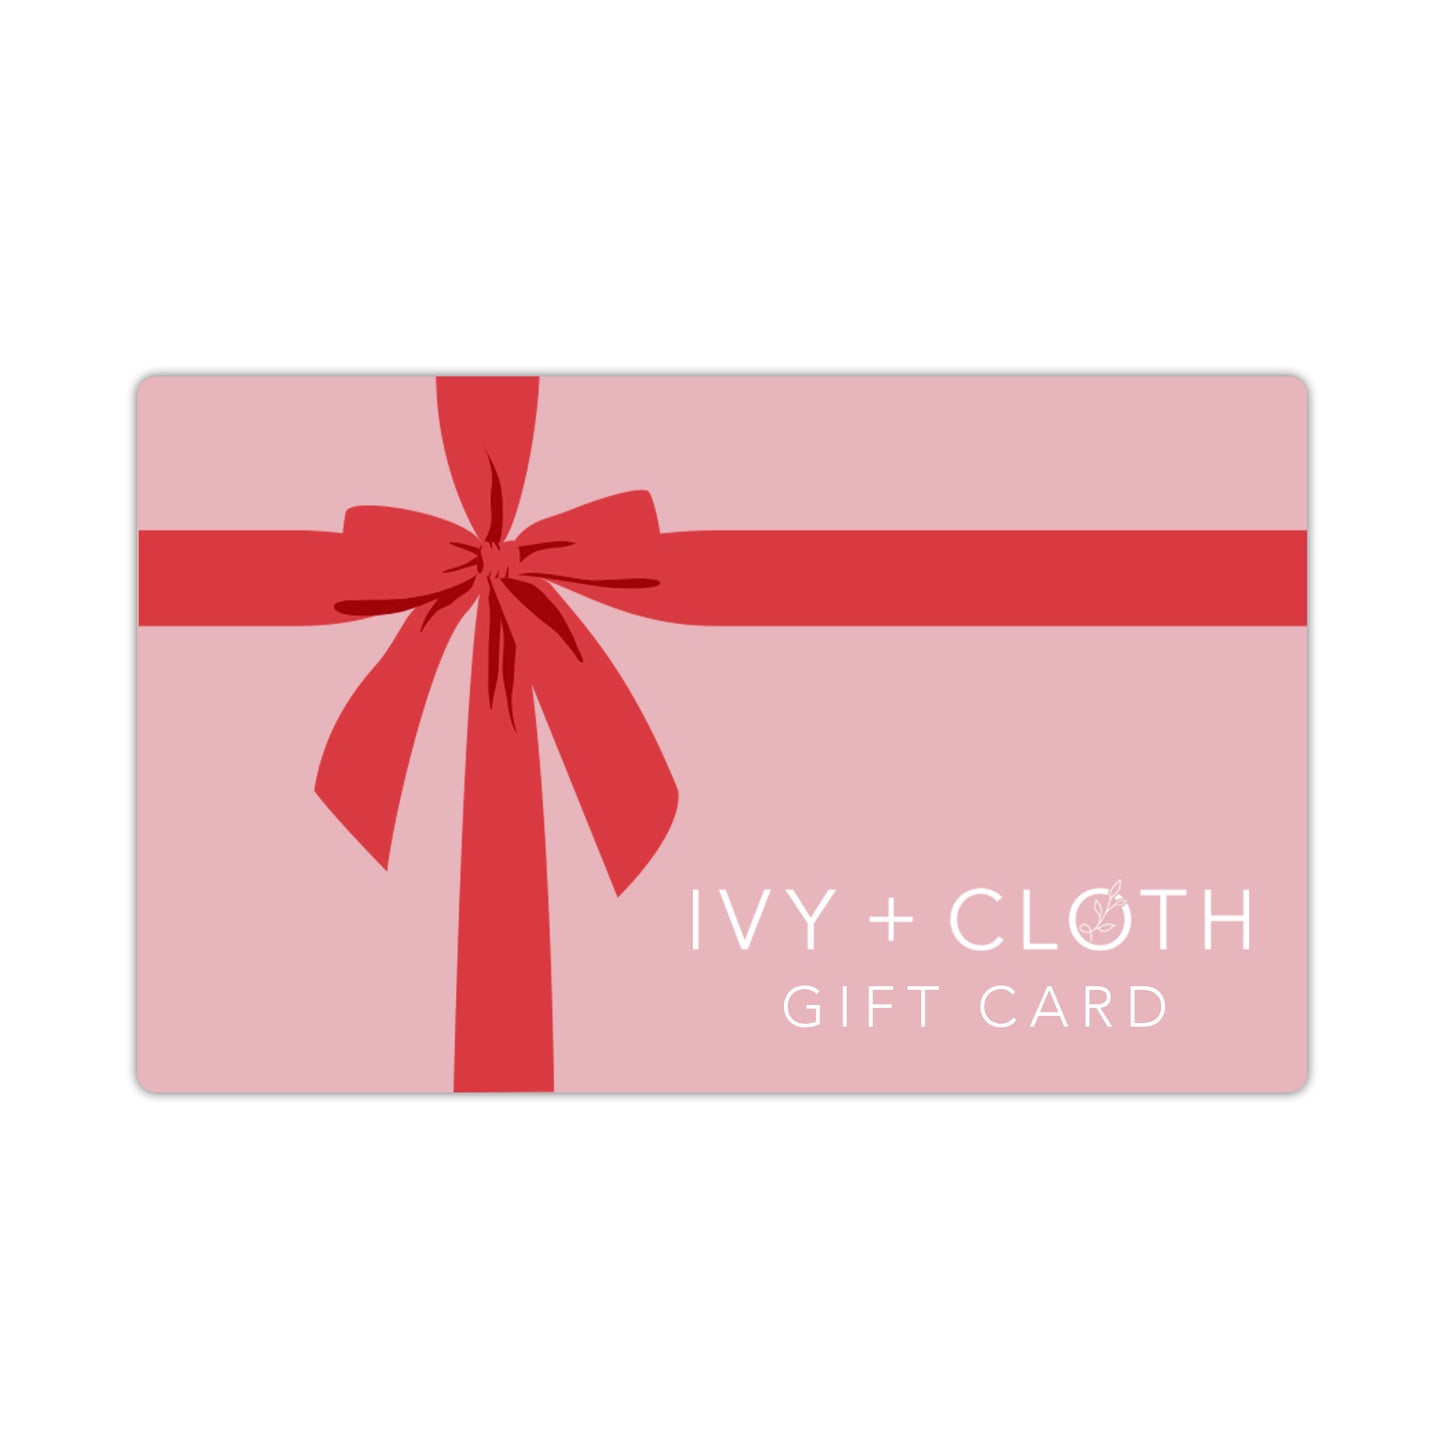 Ivy + Cloth Gift Card